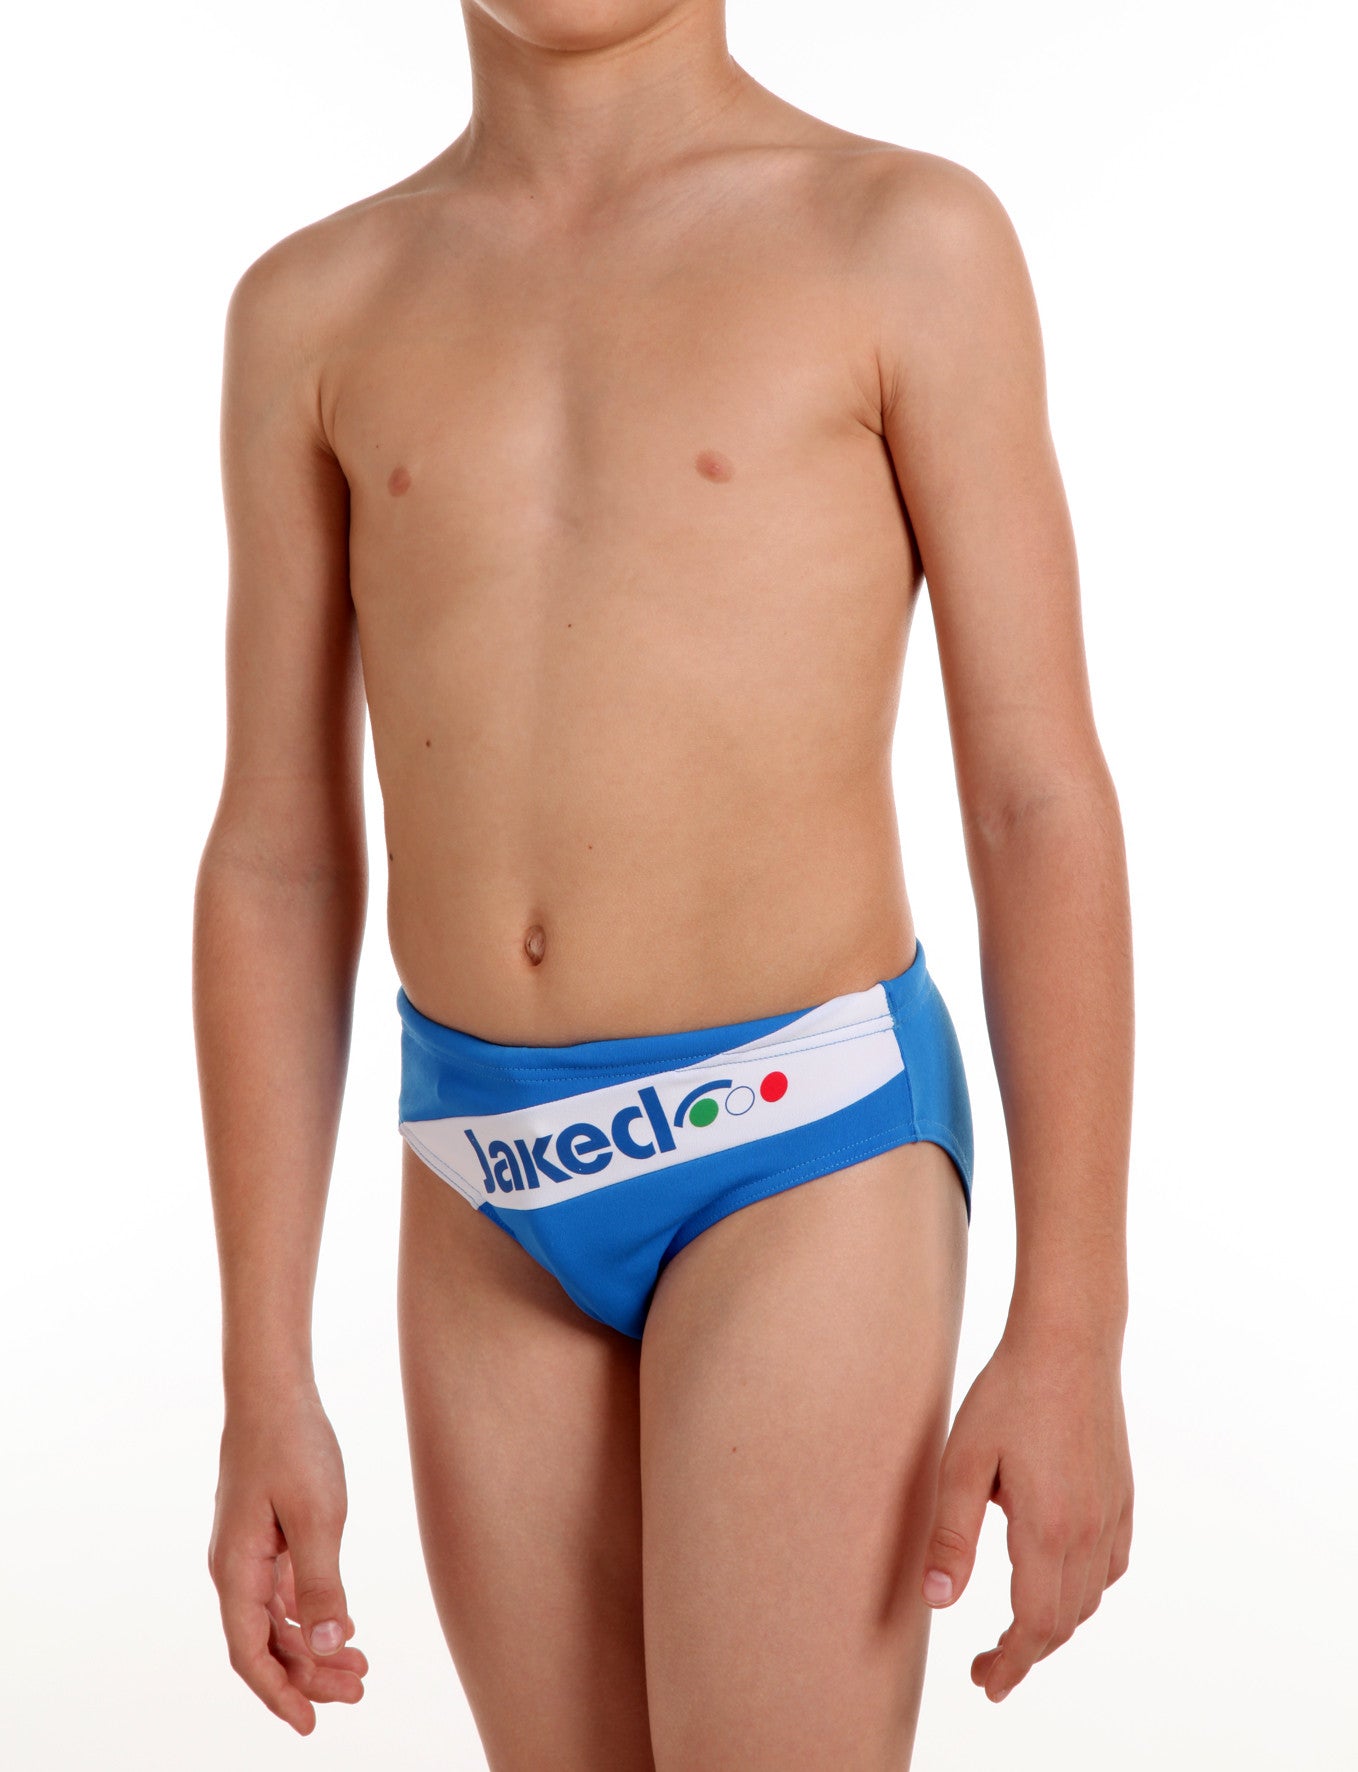 Boy's Italia Team Brief Tris Swimsuit, Jaked US Store